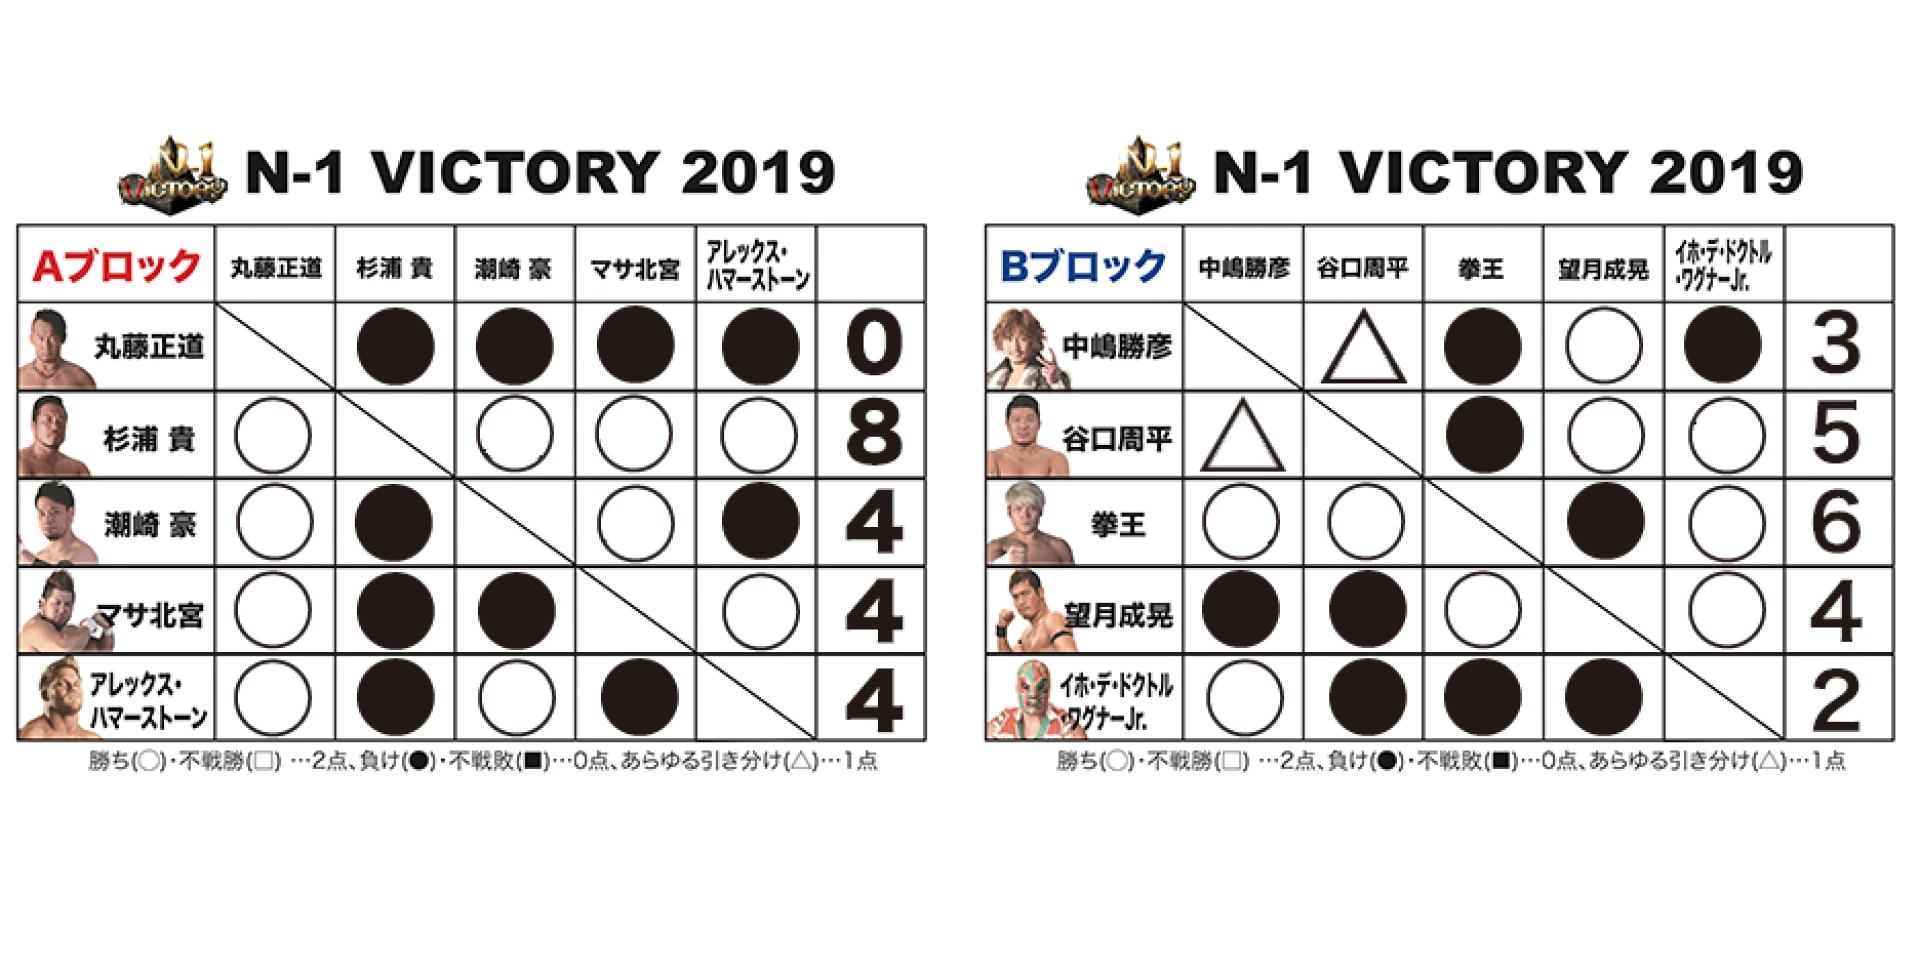 【9.9後楽園大会終了時の得点状況】『N-1 VICTORY 2019』得点表